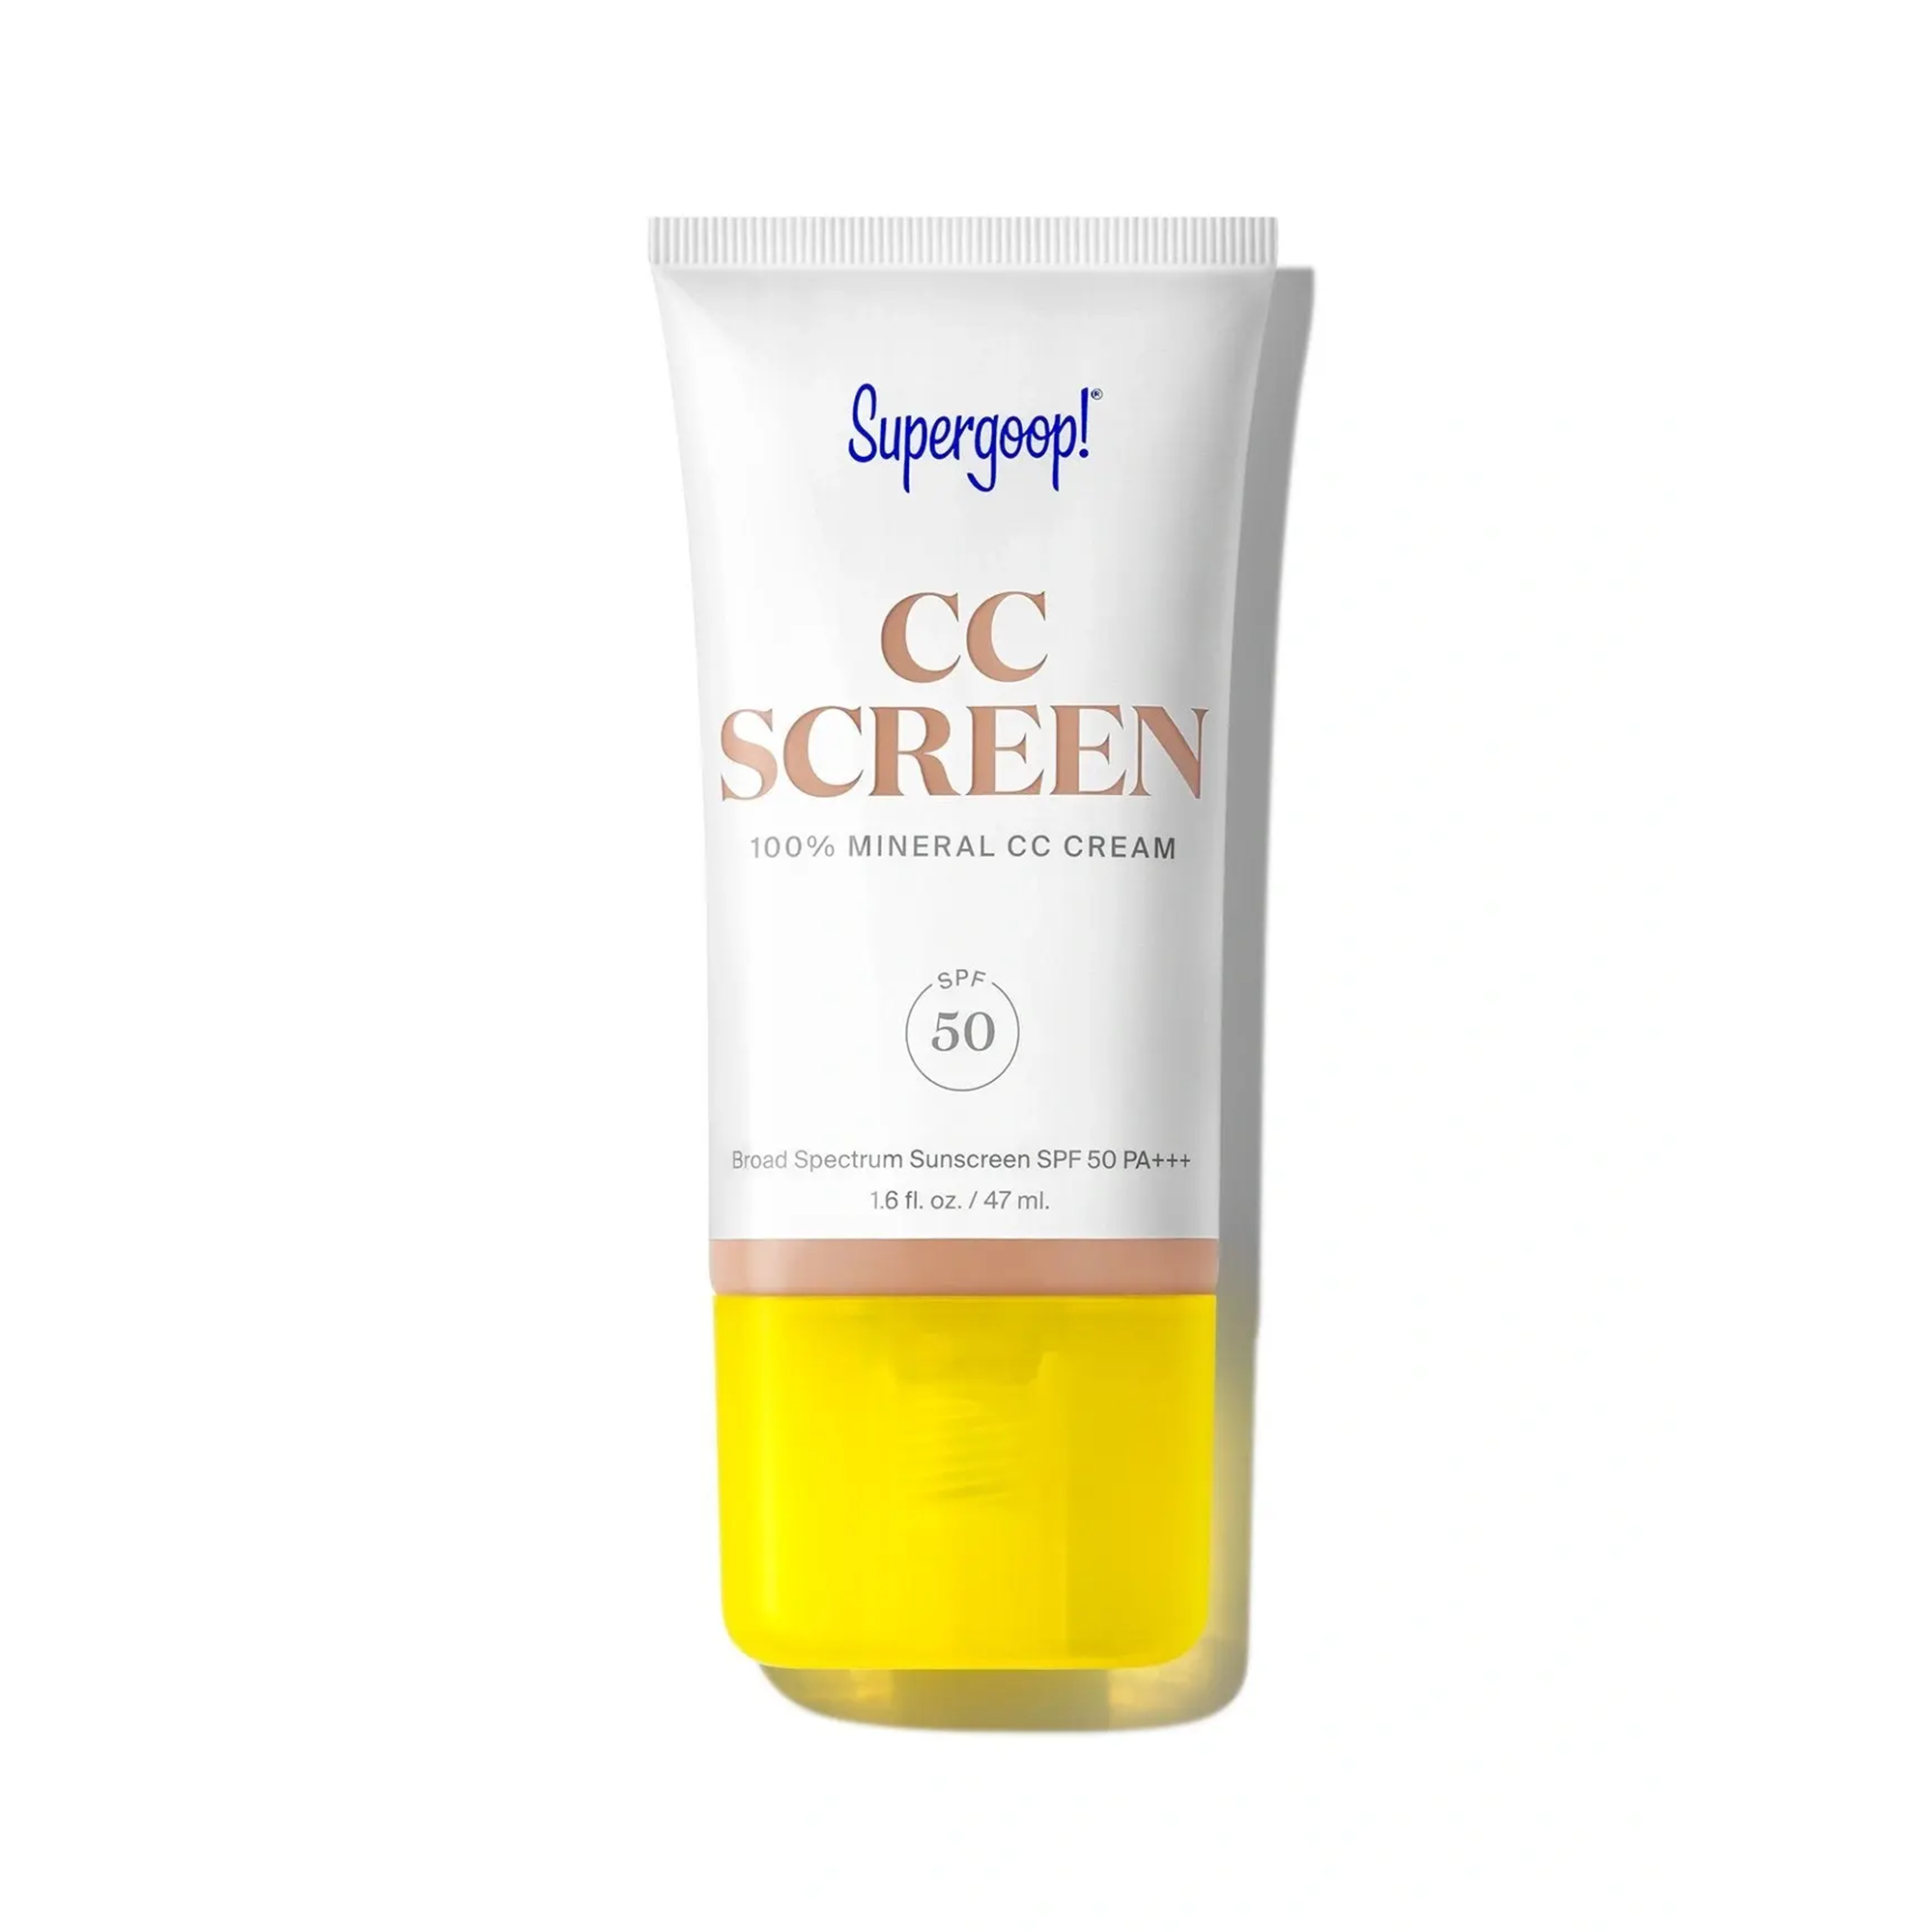 Supergoop! CC Screen 100% Mineral CC Cream SPF 50 / 306W